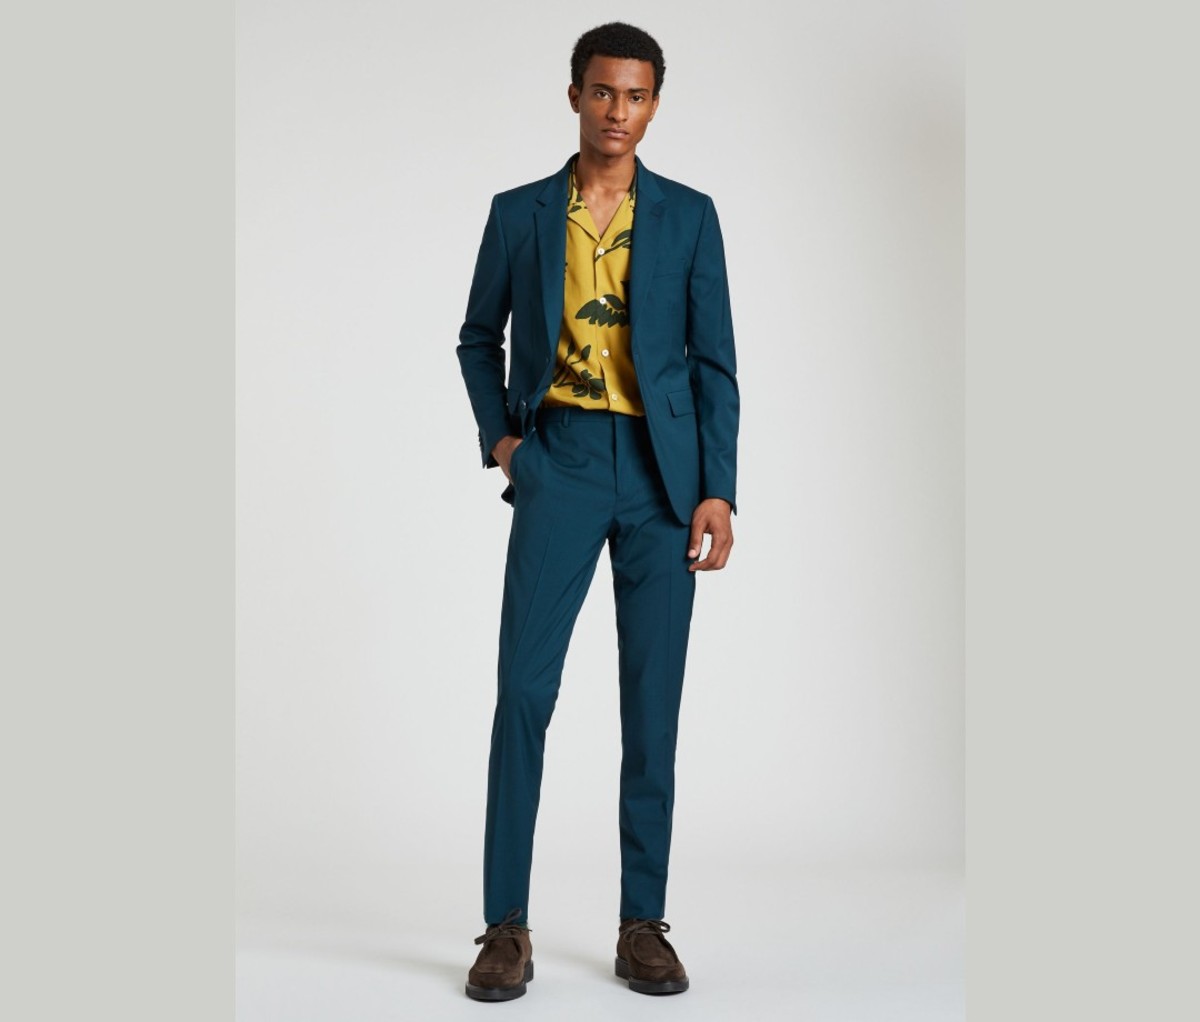 Paul Smith â€” Men's Kensington Slim Fit Teal Cerruti Stretch Wool Suit